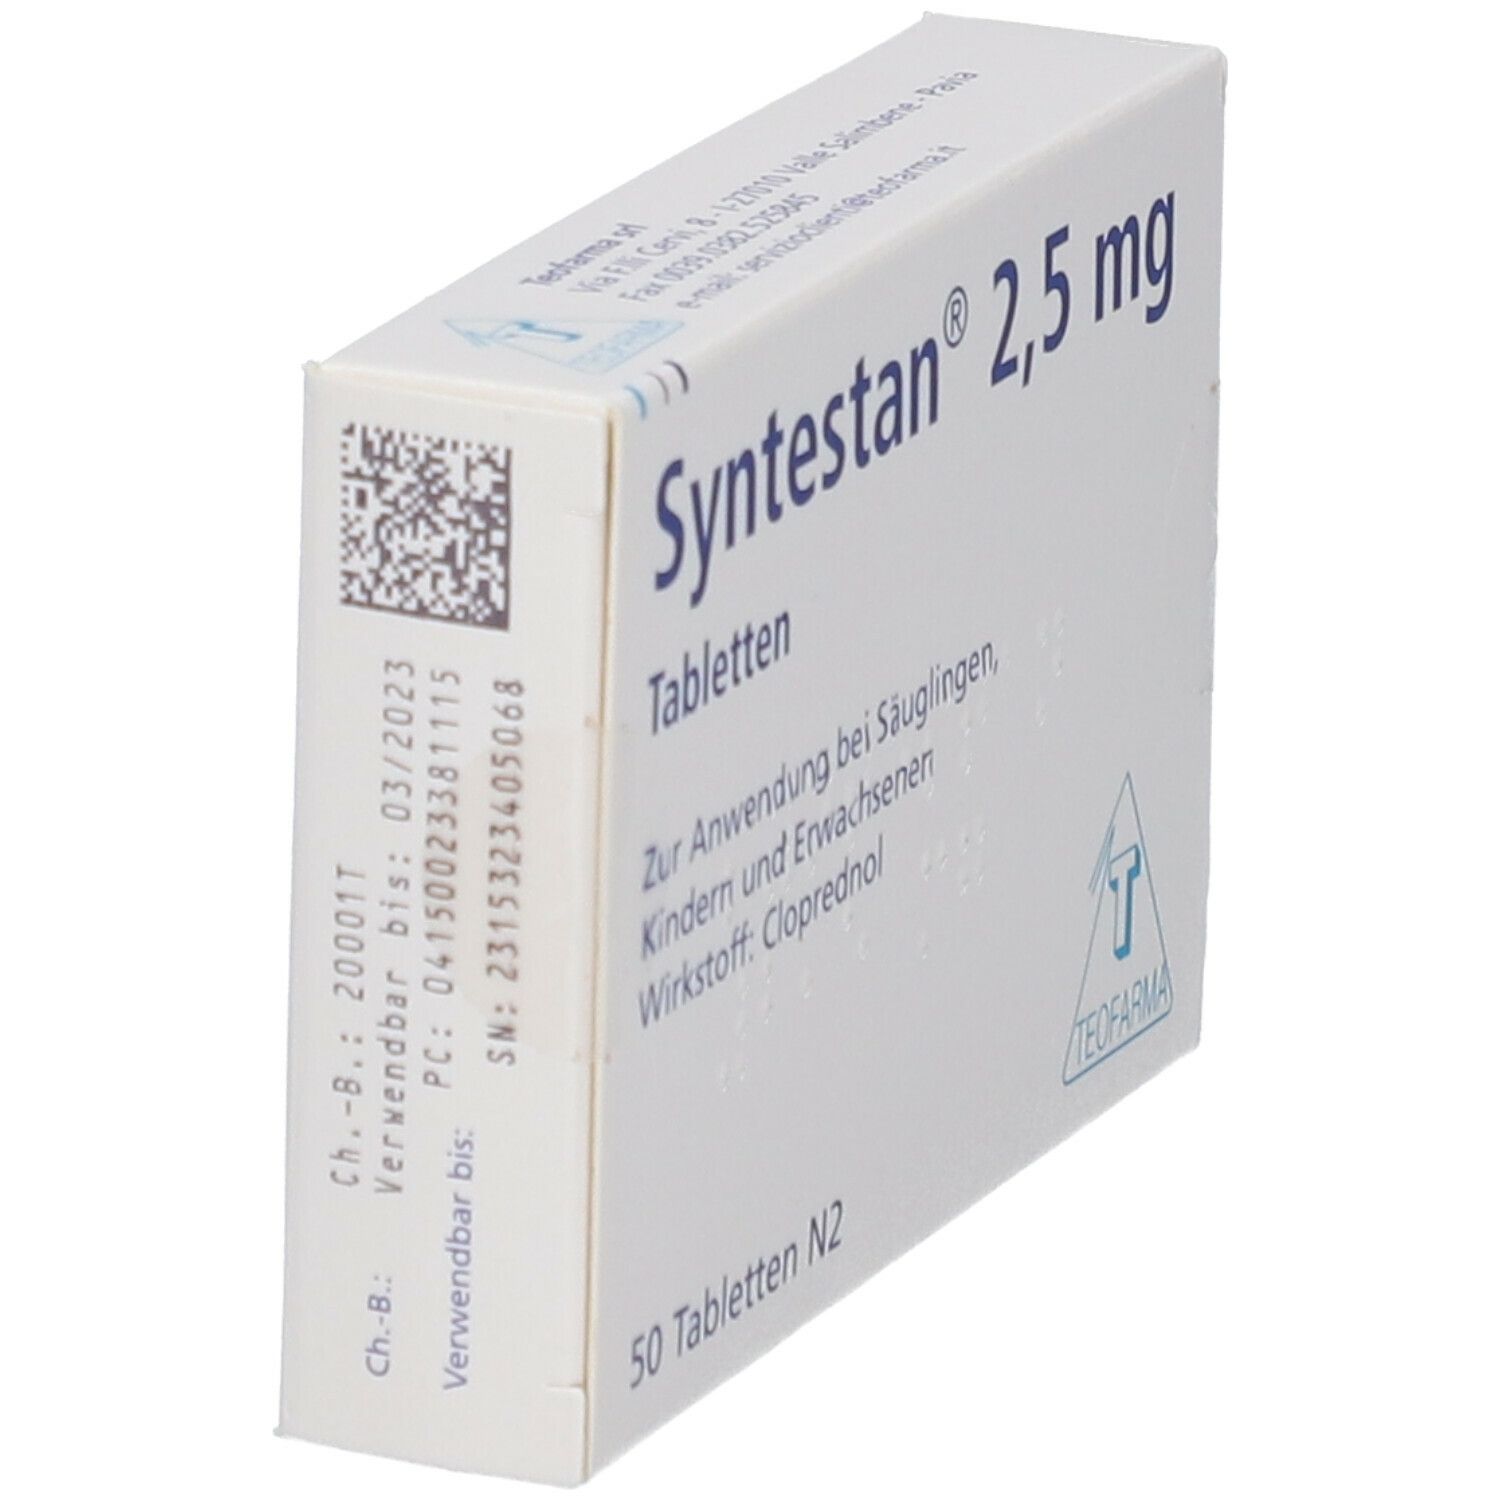 Syntestan® 2,5 mg